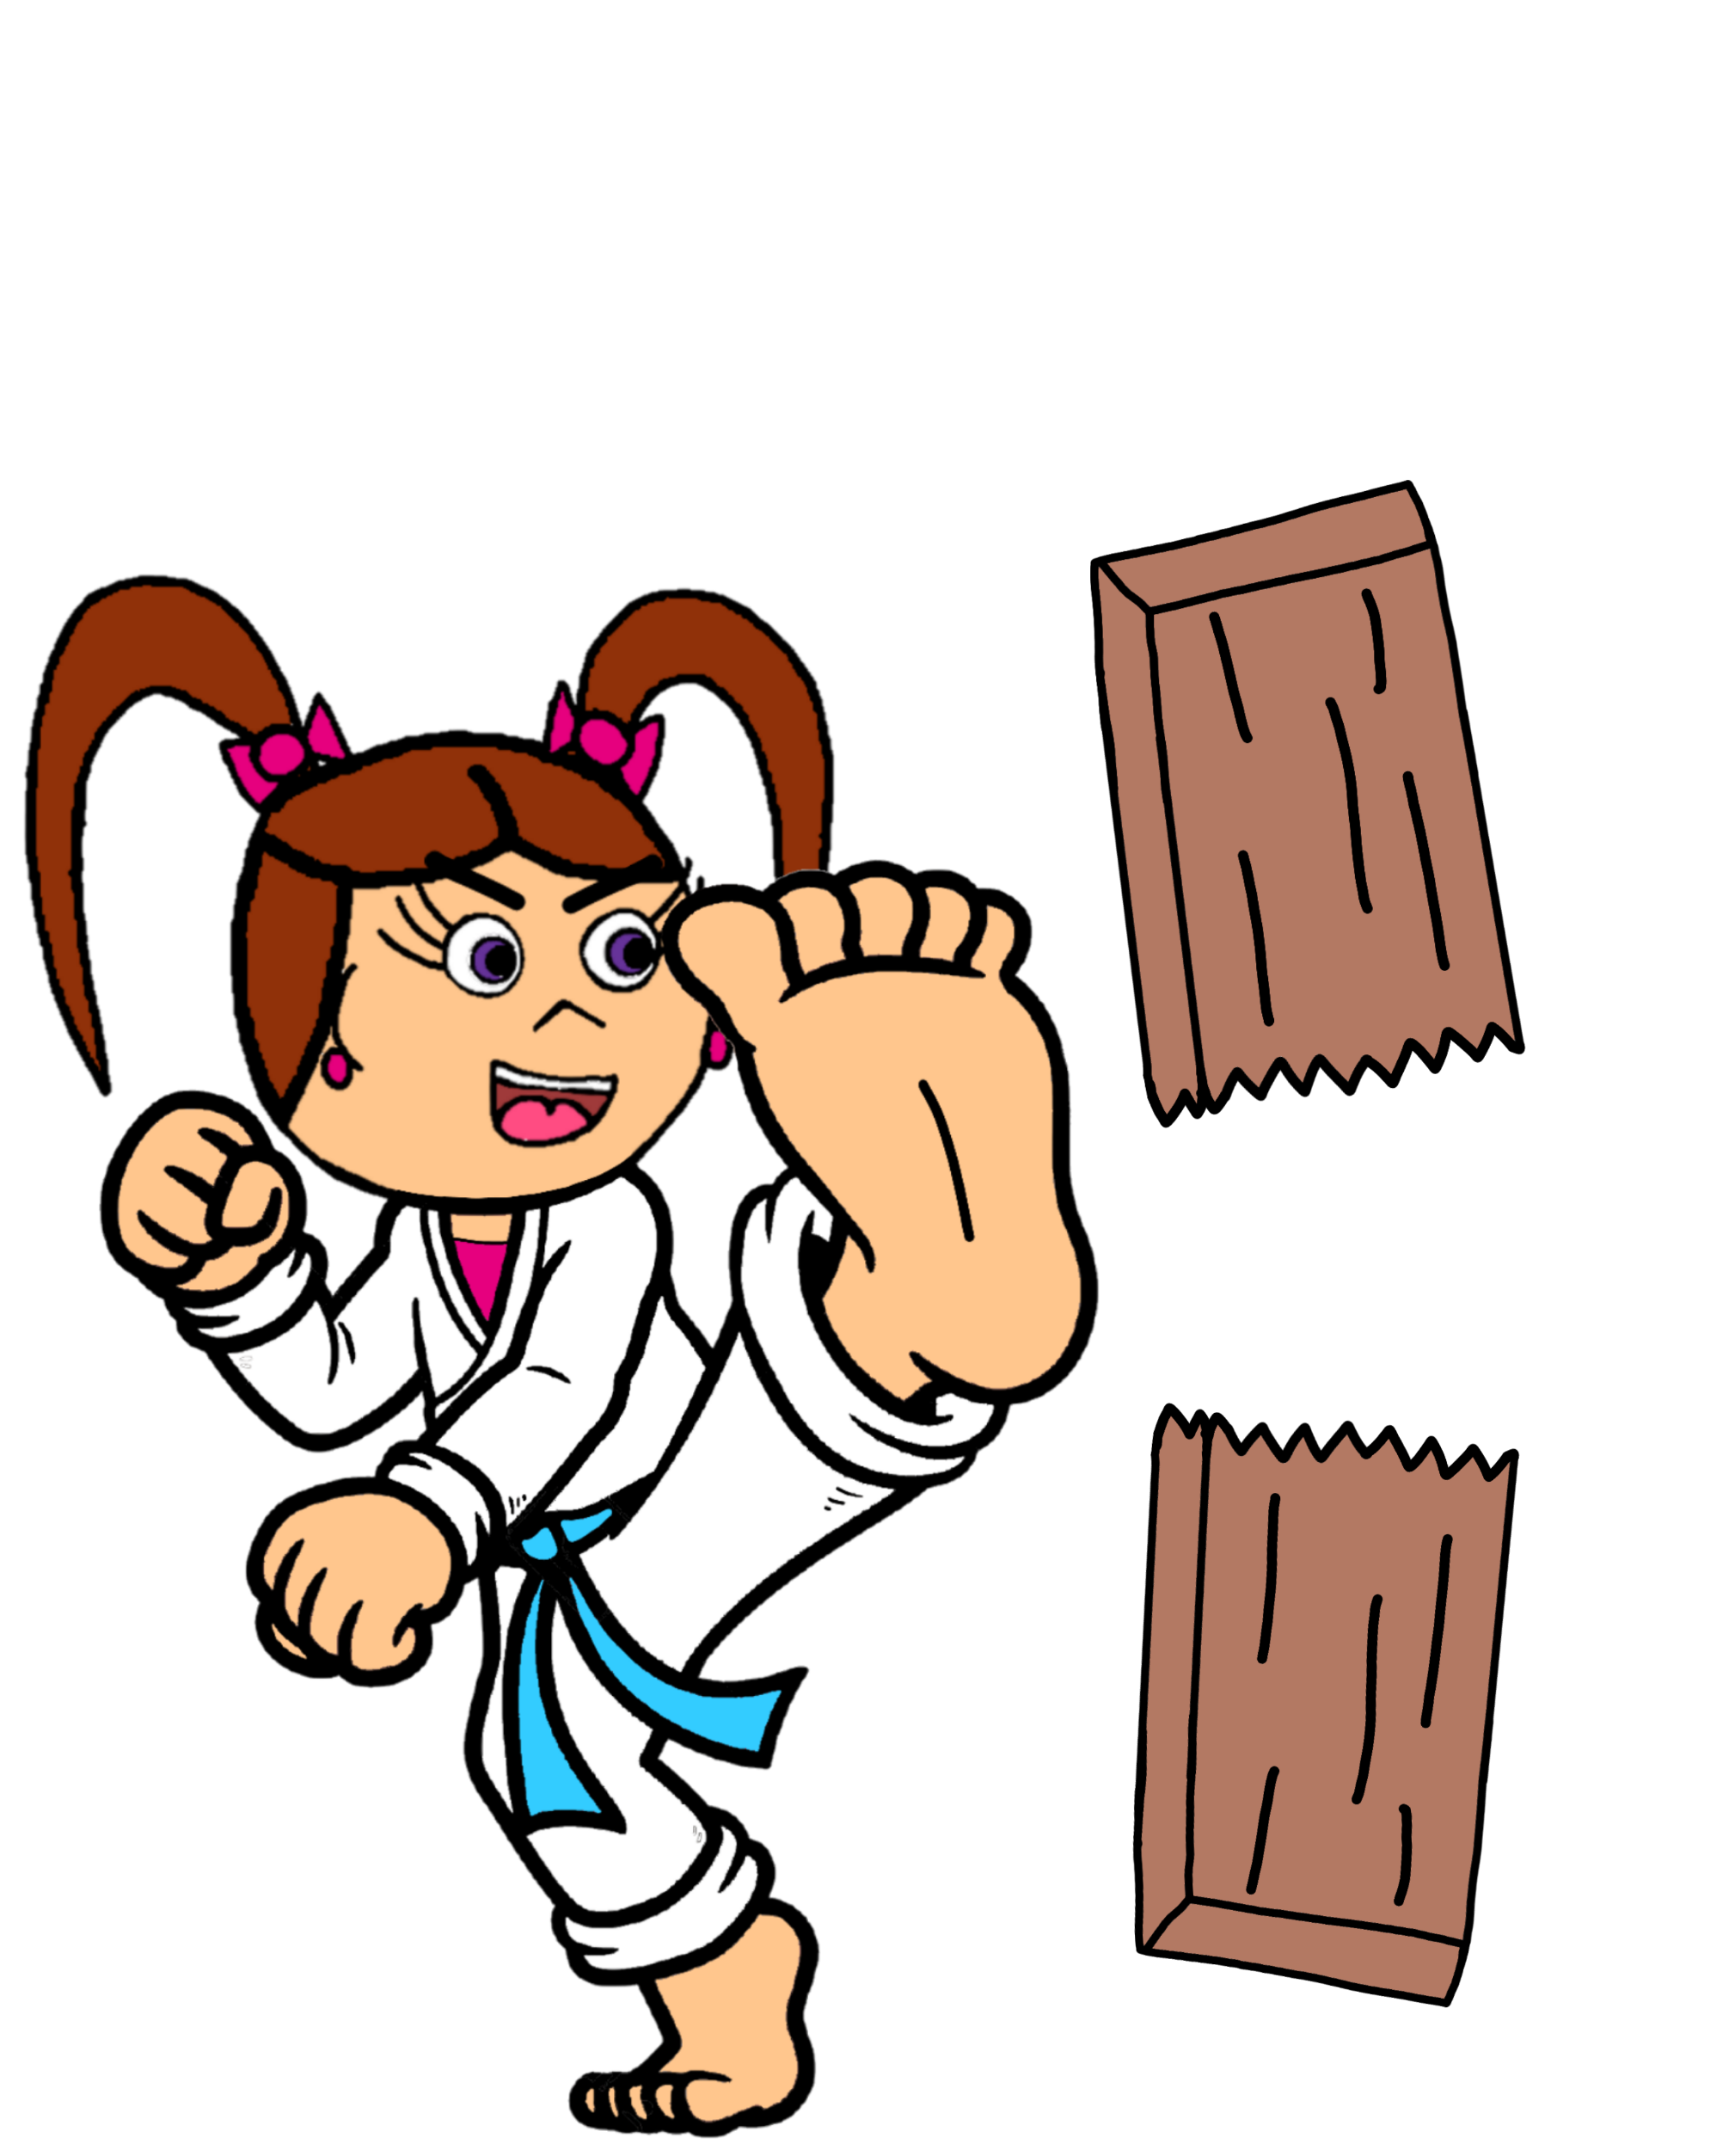 Daisy Karate chop by KiddyfriendlyOCs on DeviantArt